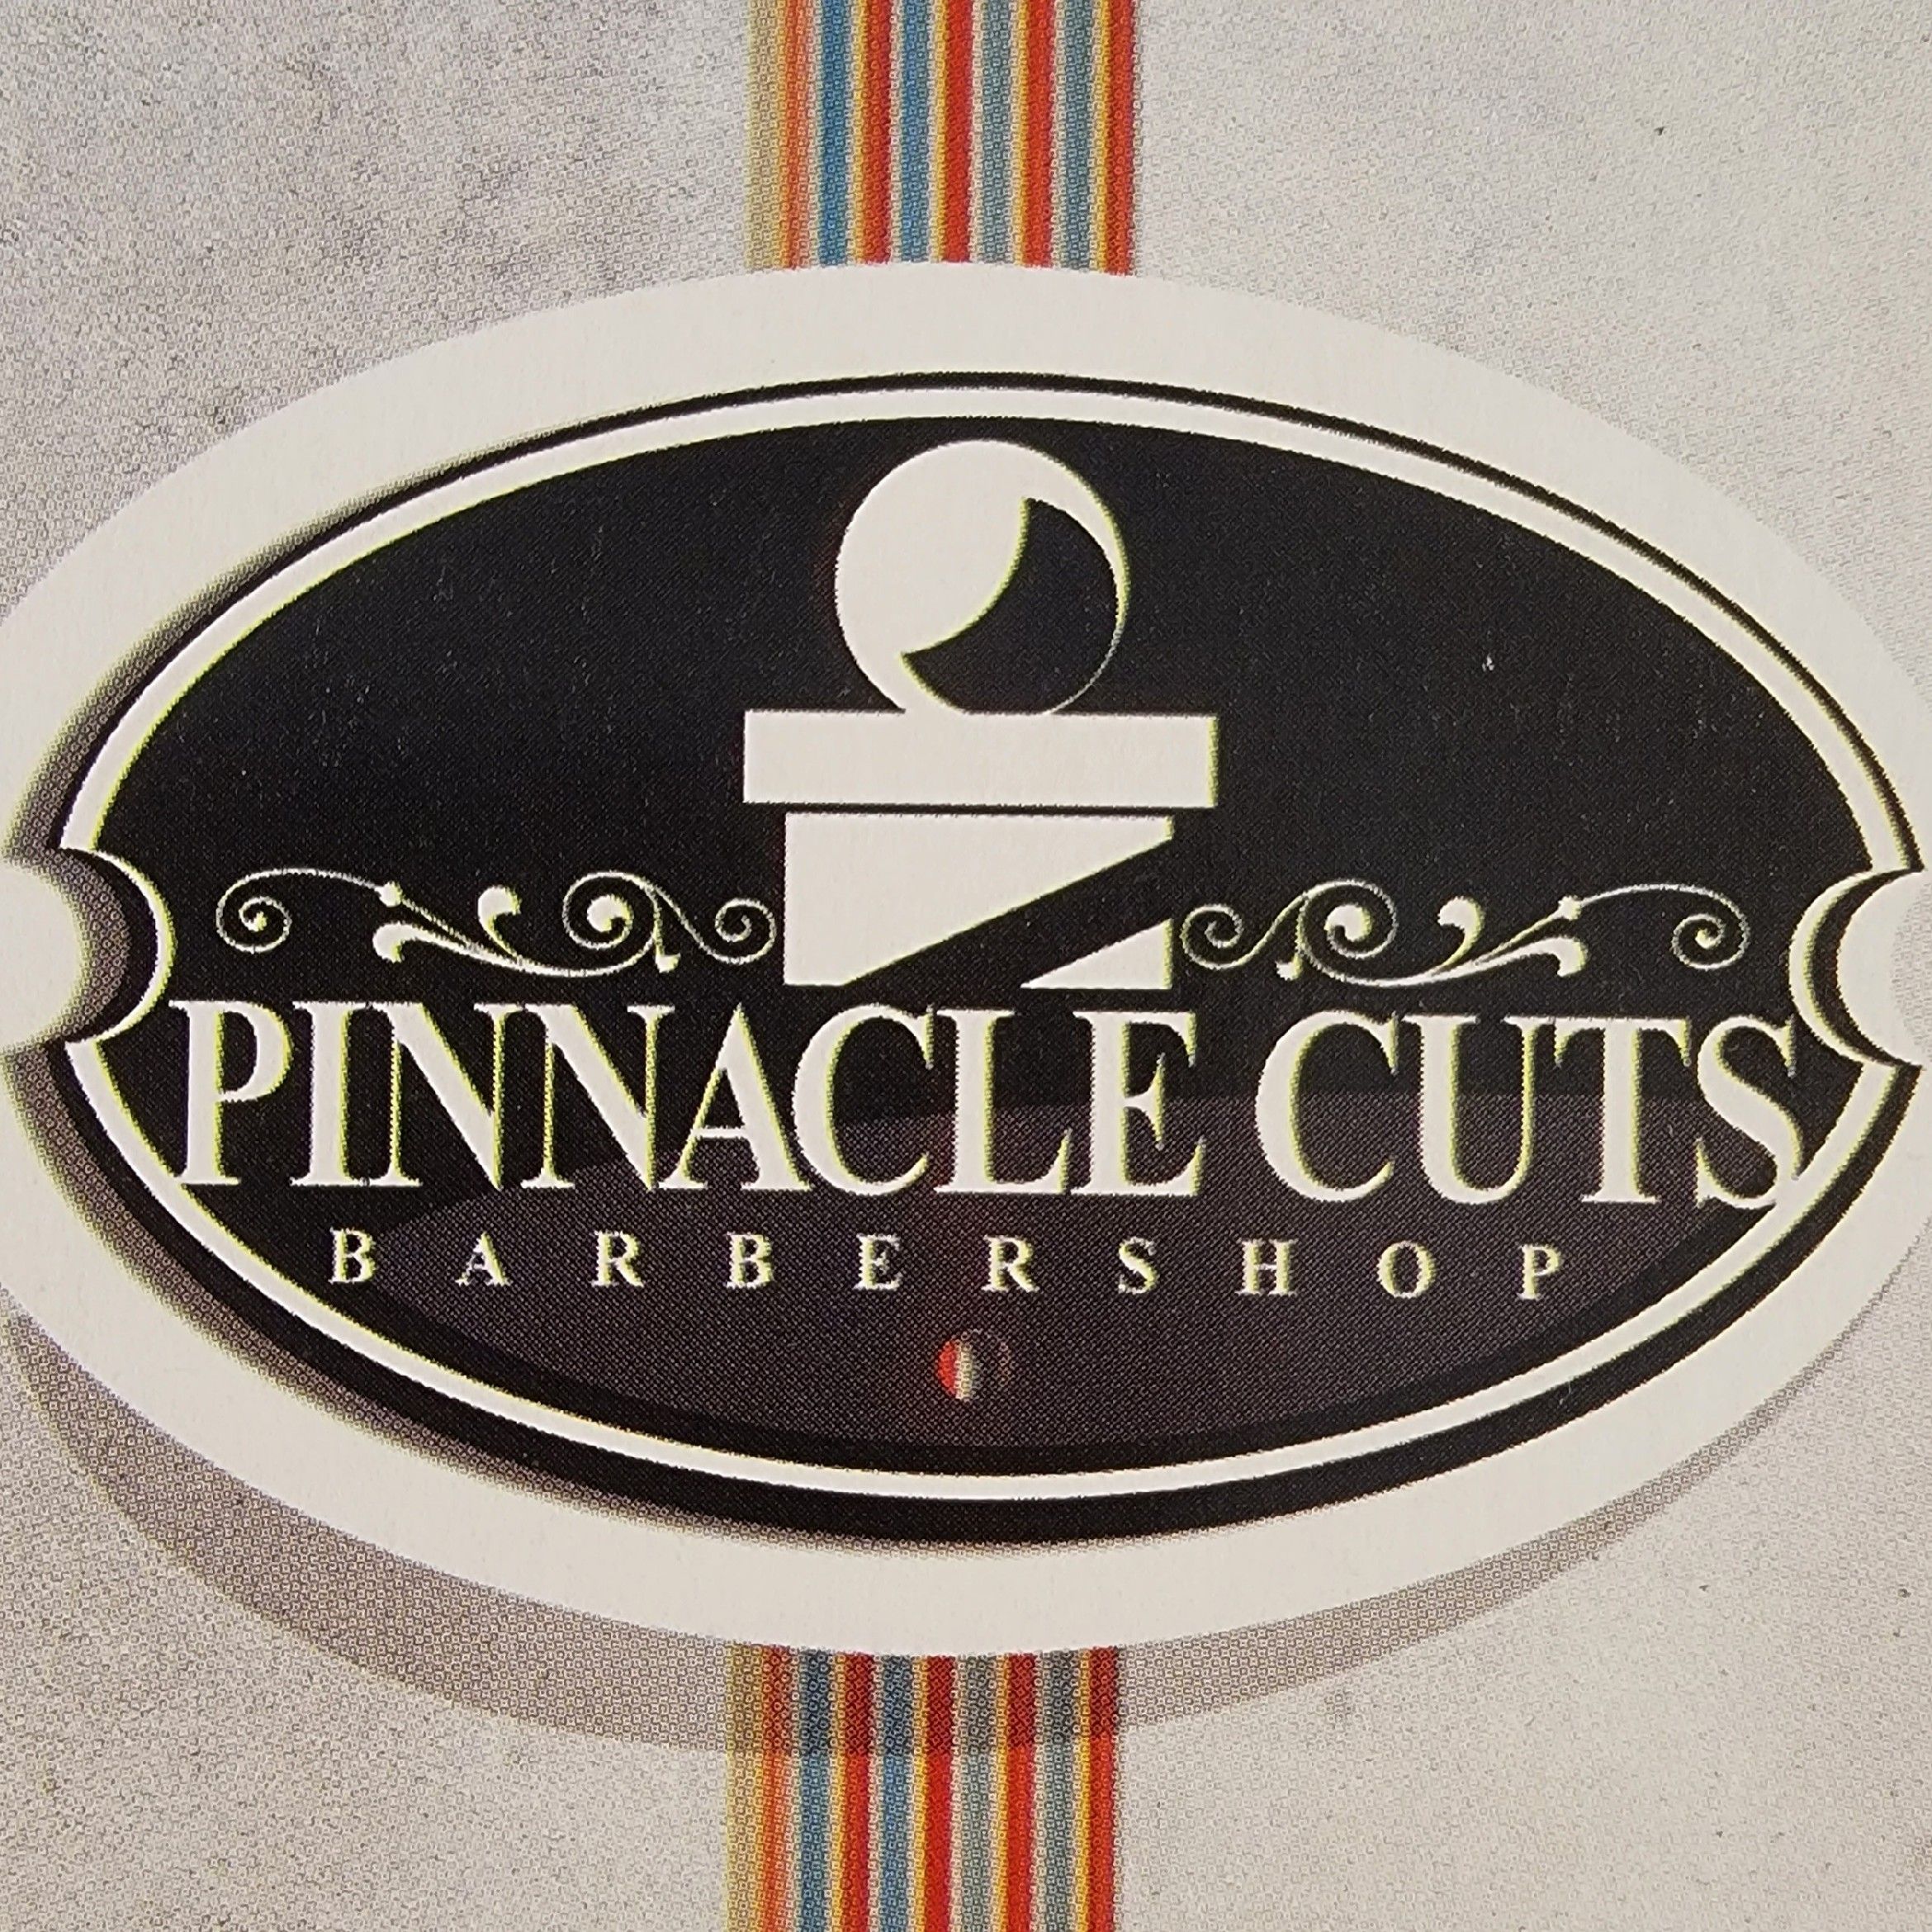 "MR MIKE" @ Pinnacle Cuts Barber Shop, 6204 S. Cooper, Suite 118, Arlington, 76001